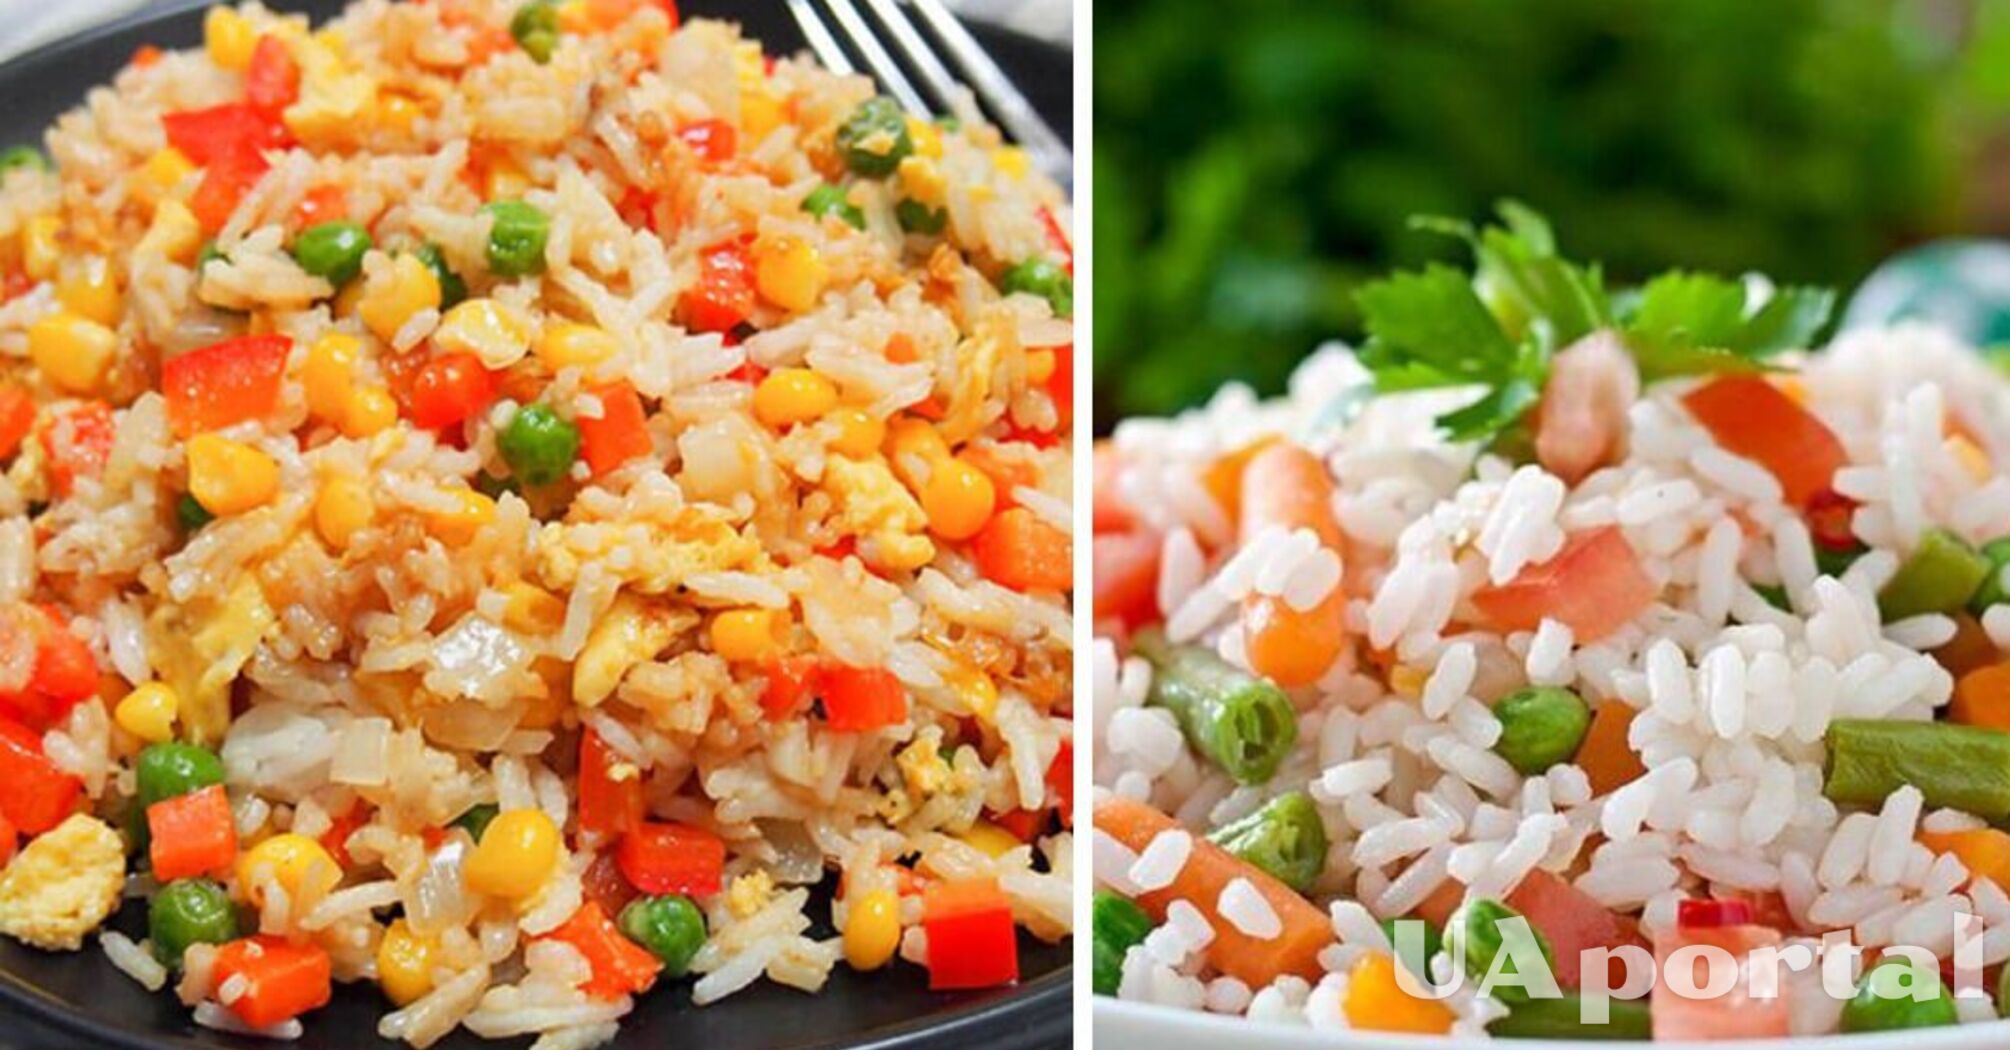 Швидко та бюджетно: рецепт рису з овочами за 30 хвилин 